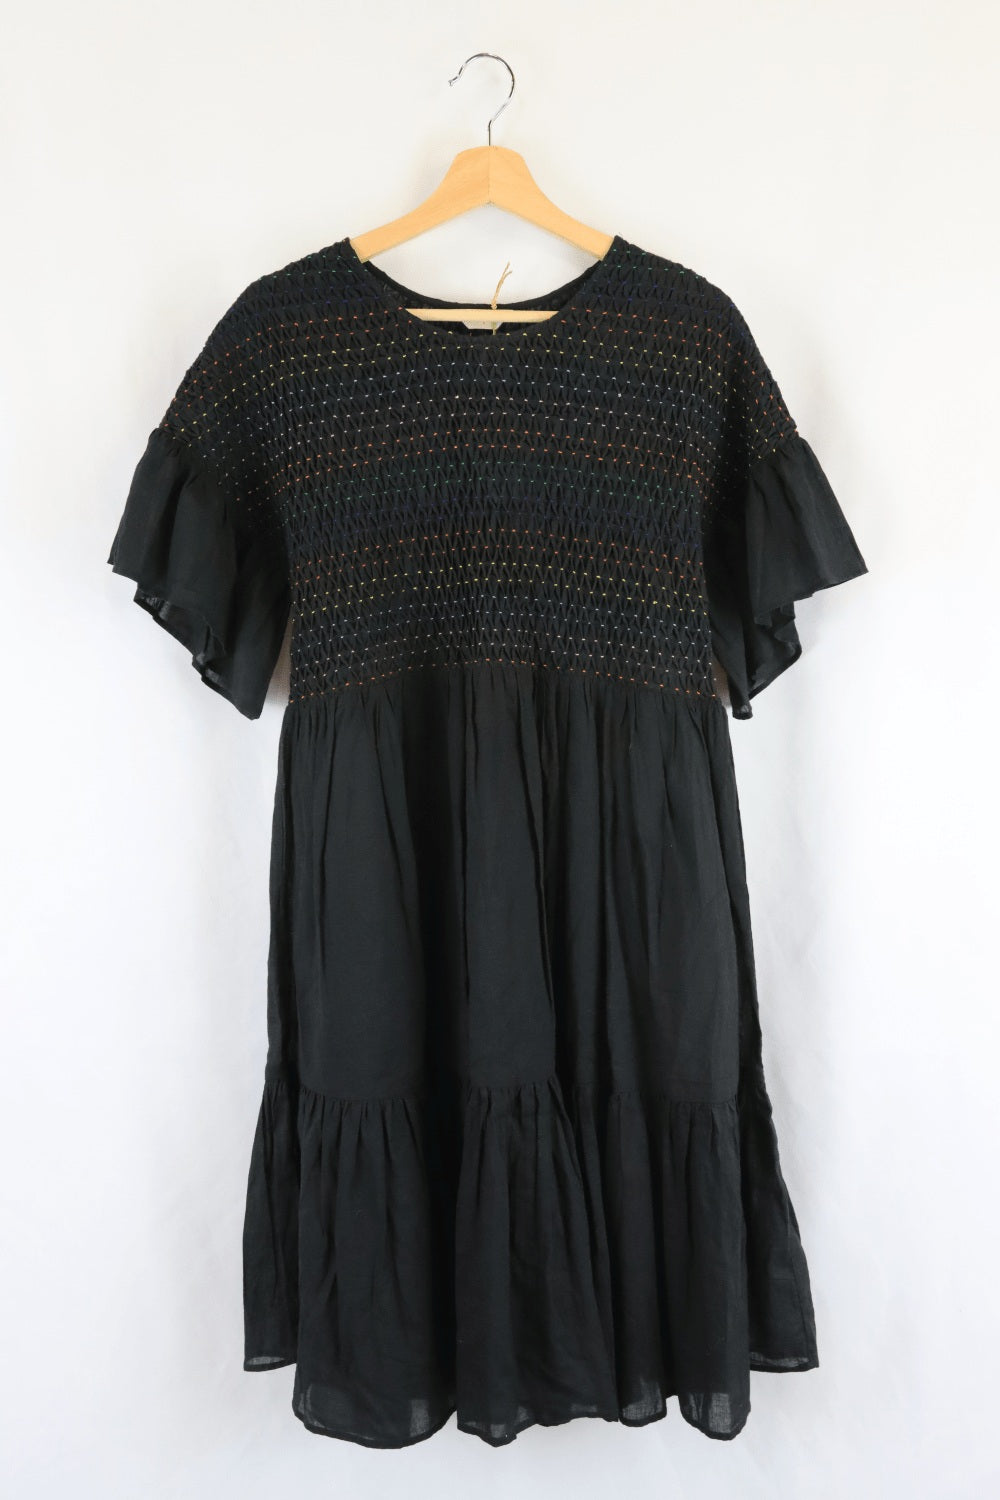 Gorman Black Dress With Multi Colour Print 8